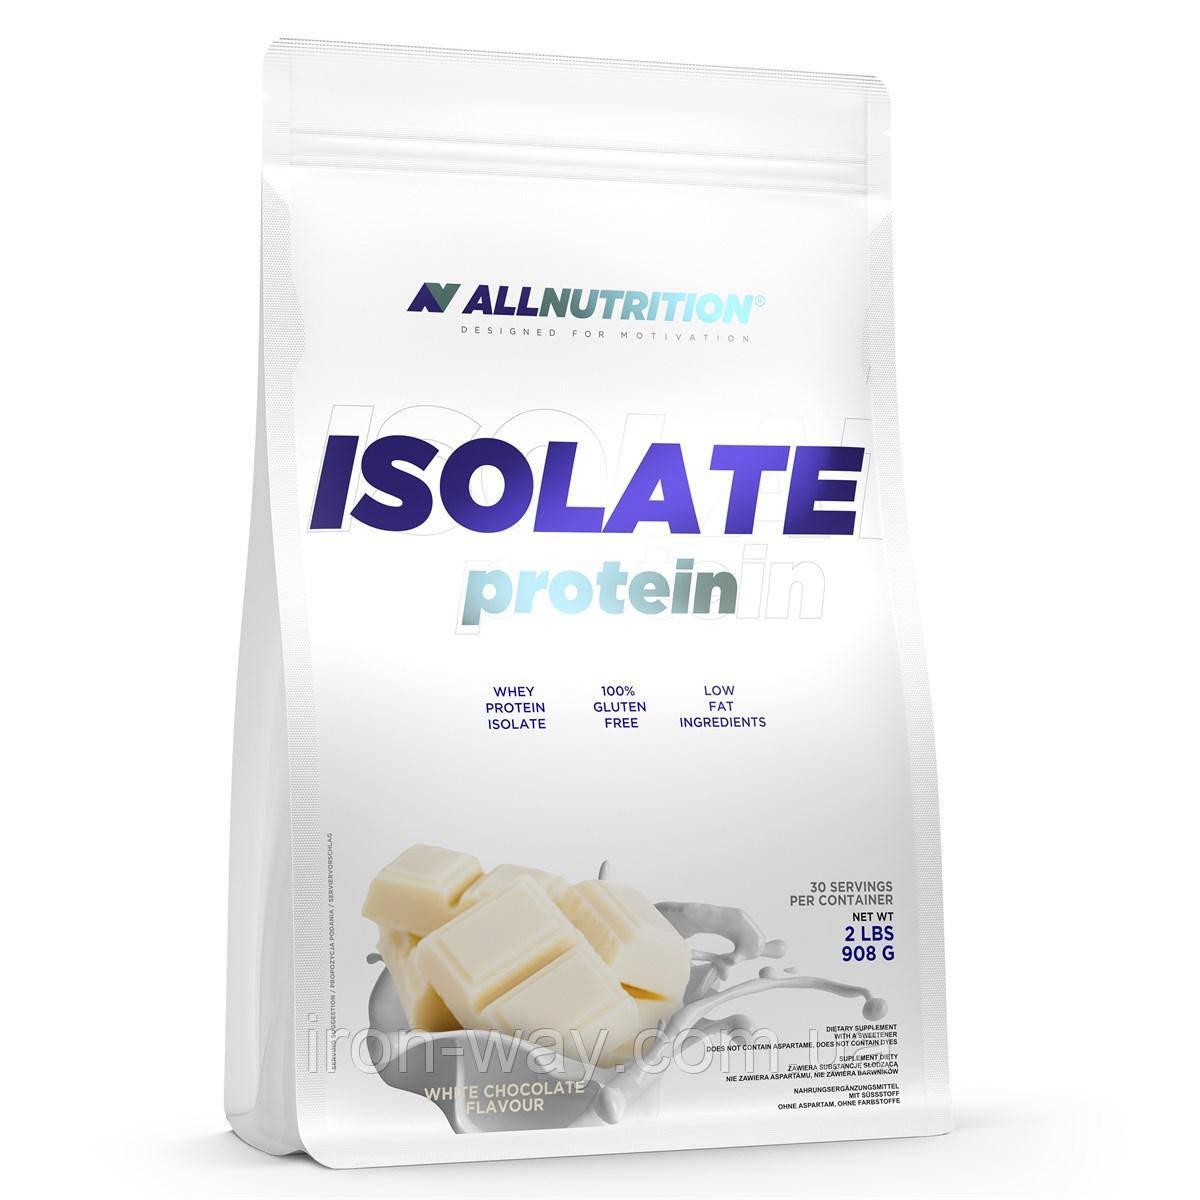 Isolate Protein - 908g Chocolate-Walnut